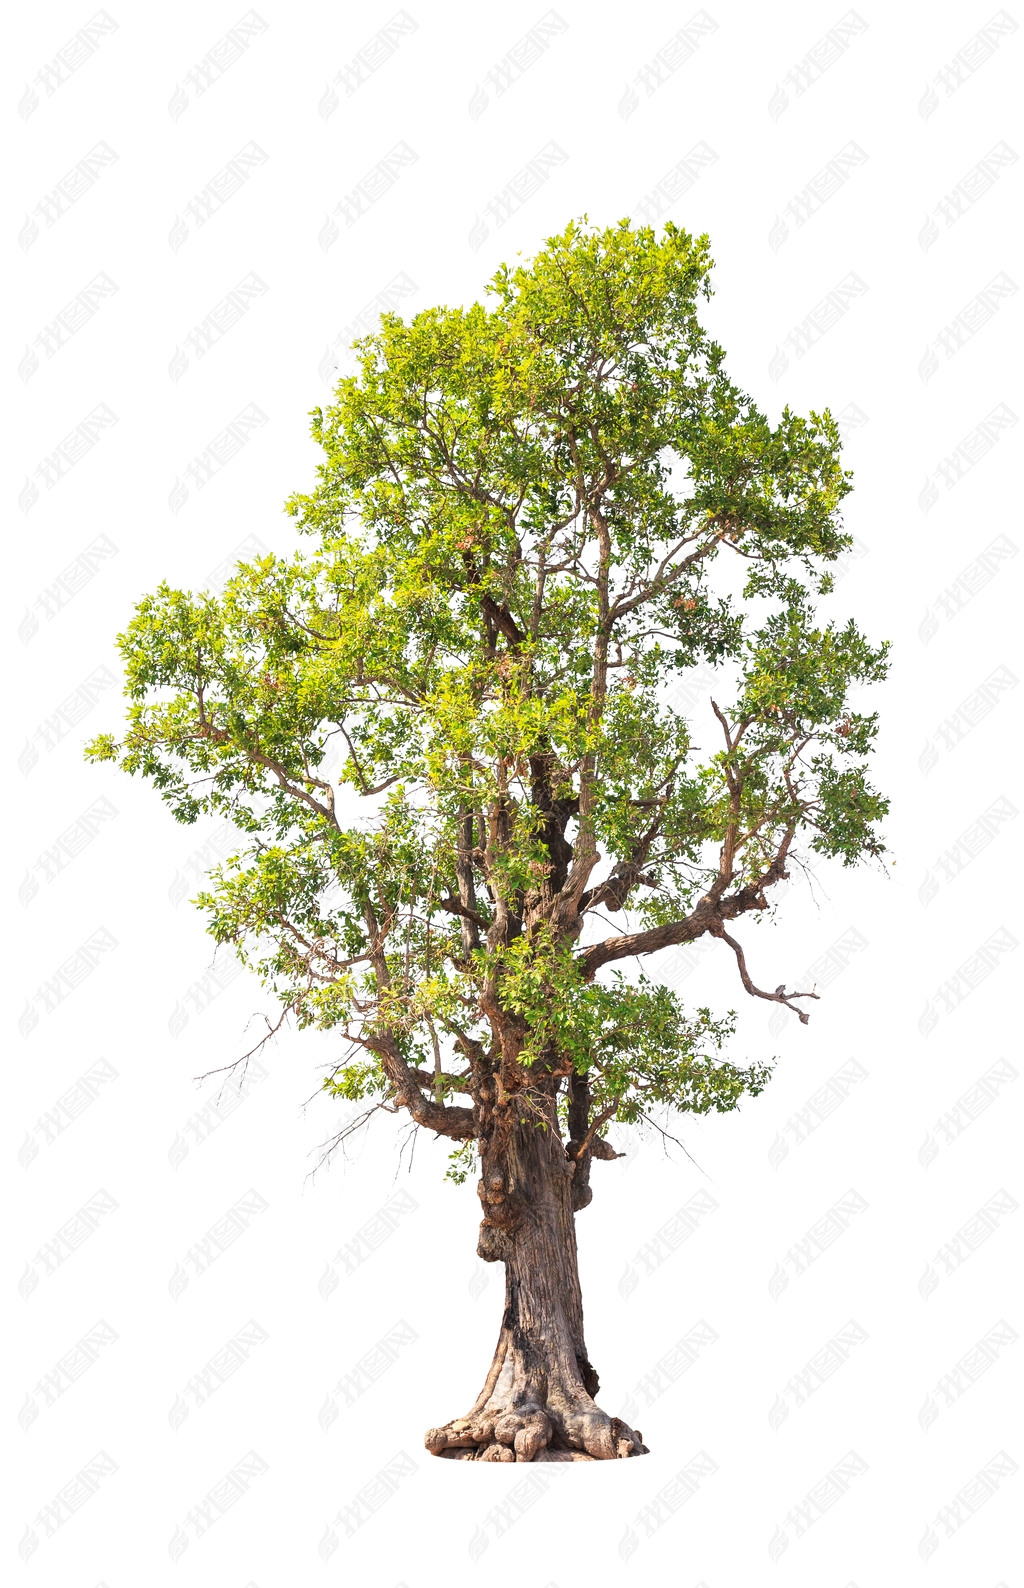 Irvingia malayana also known as Wild Almond, old tropical tree i